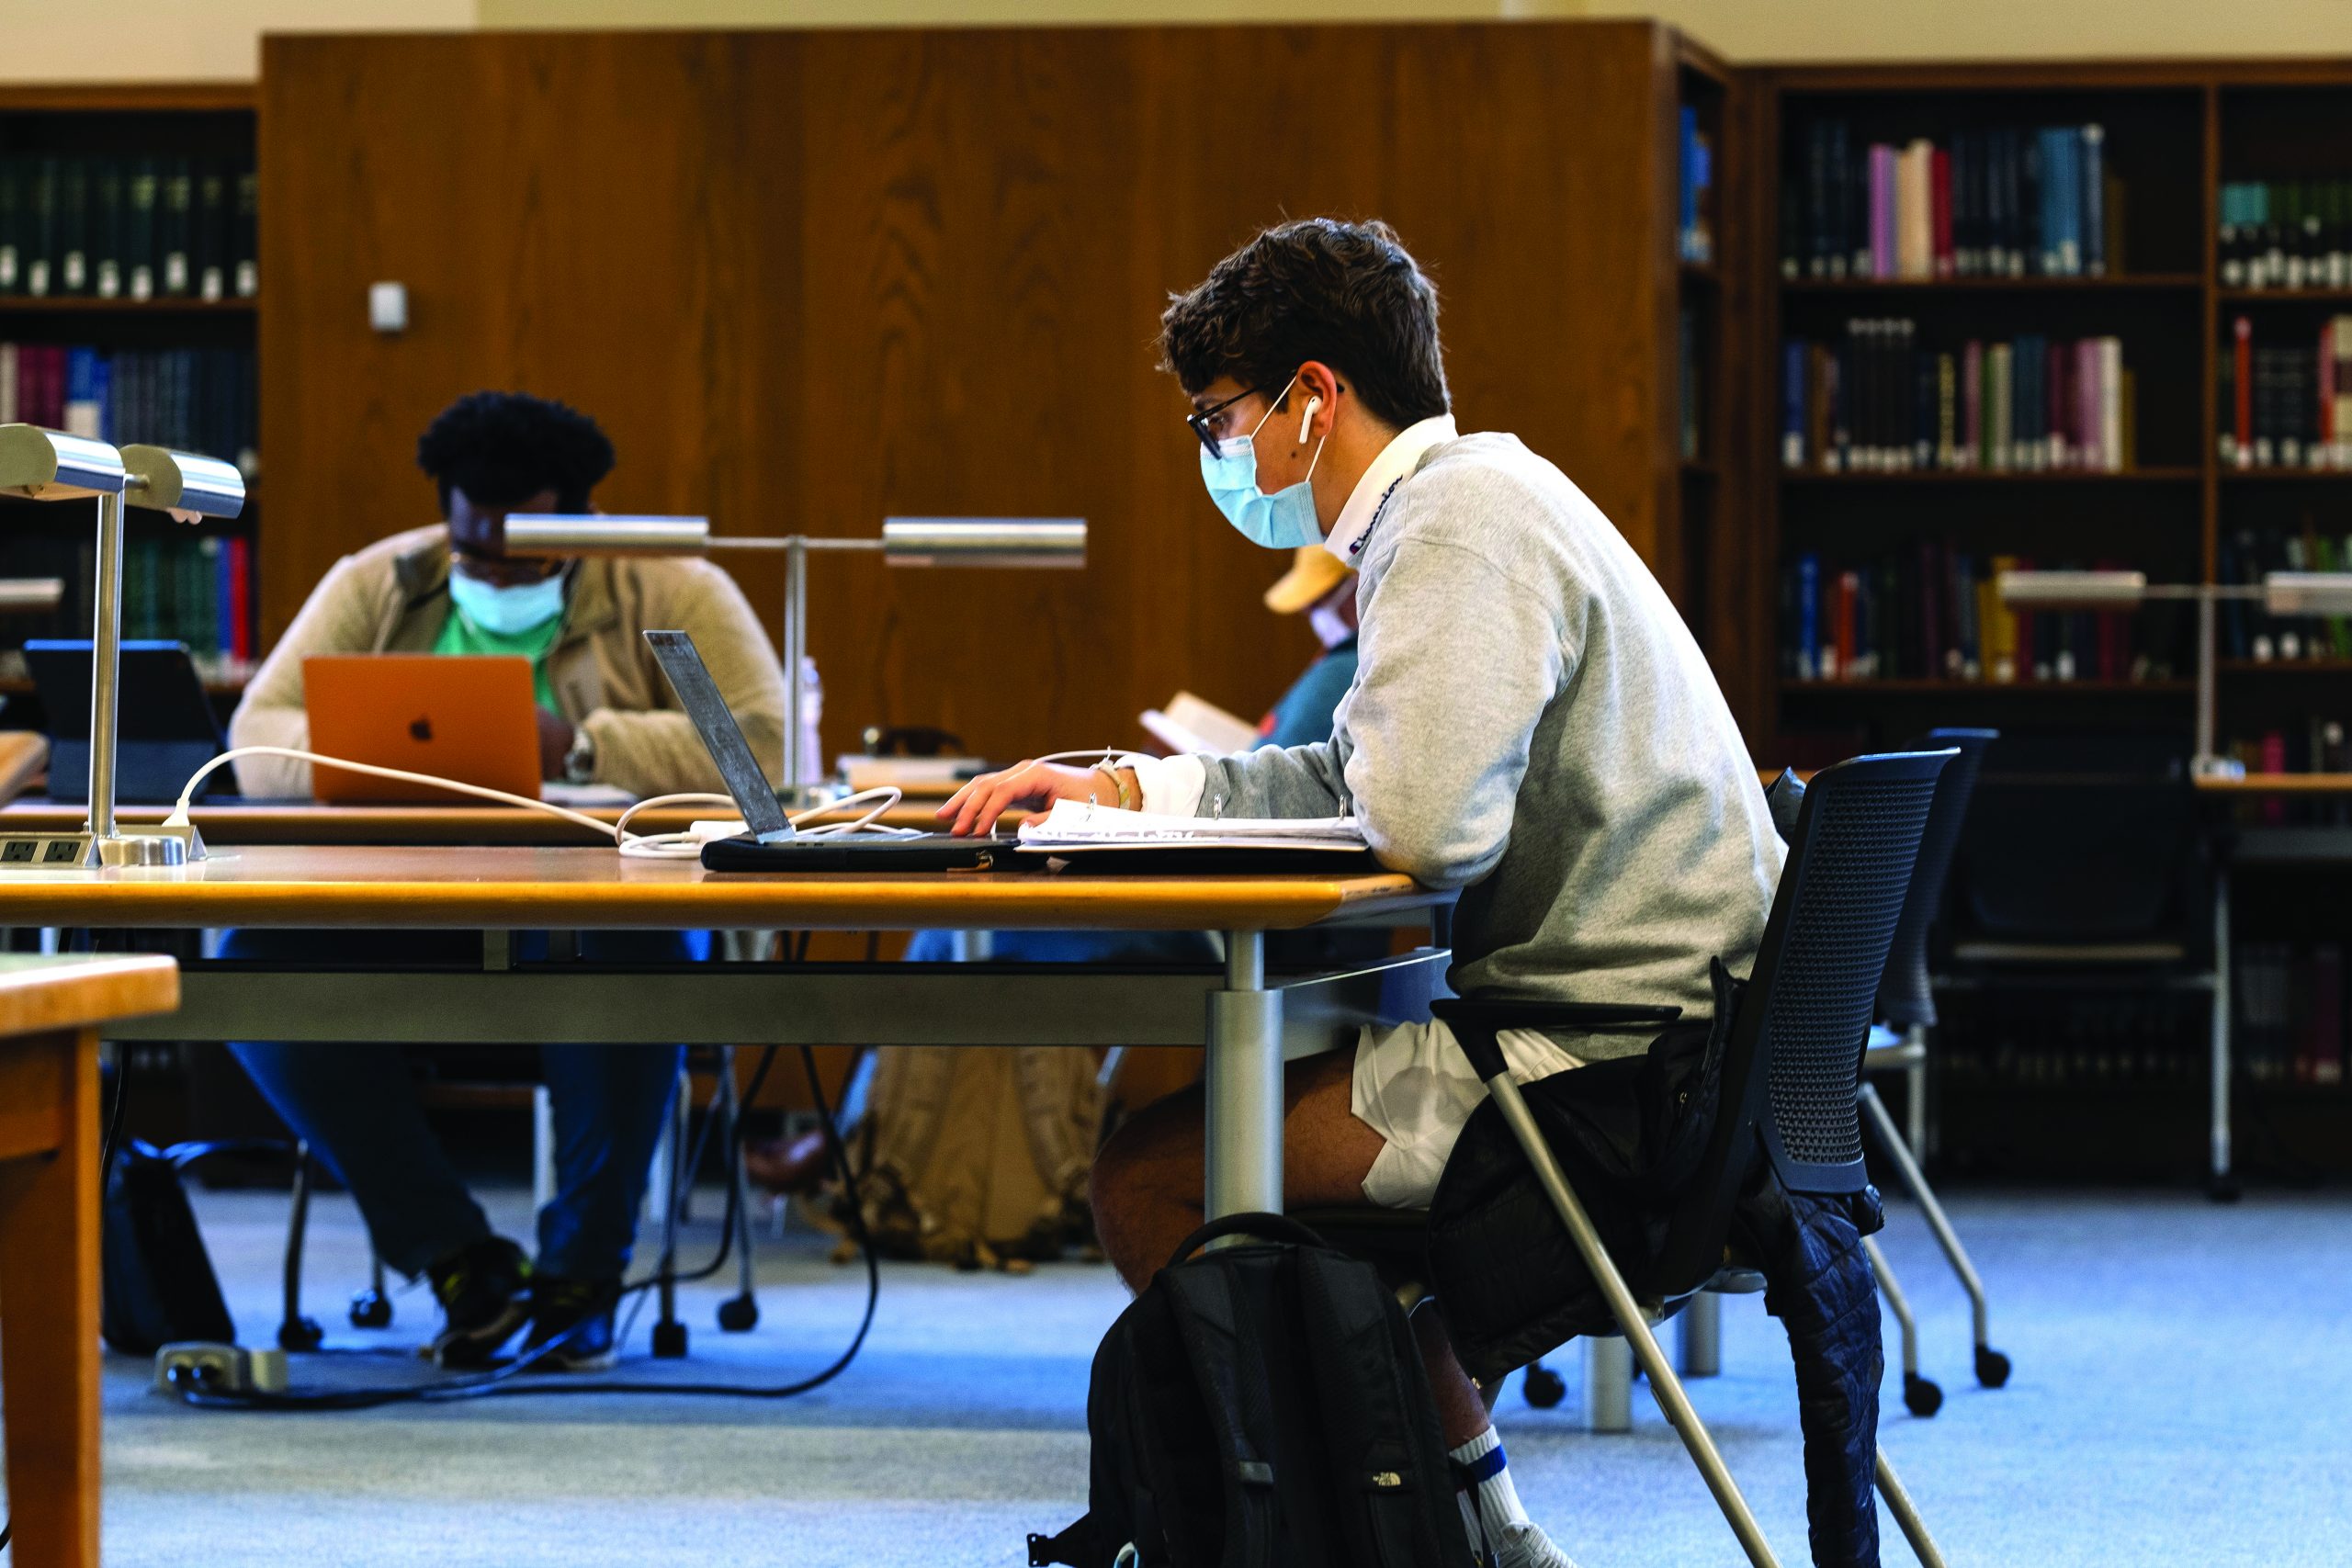 Students study in Davis Library on the campus of the University of North Carolina at Chapel Hill. November 19, 2020. (Jon Gardiner/UNC-Chapel Hill